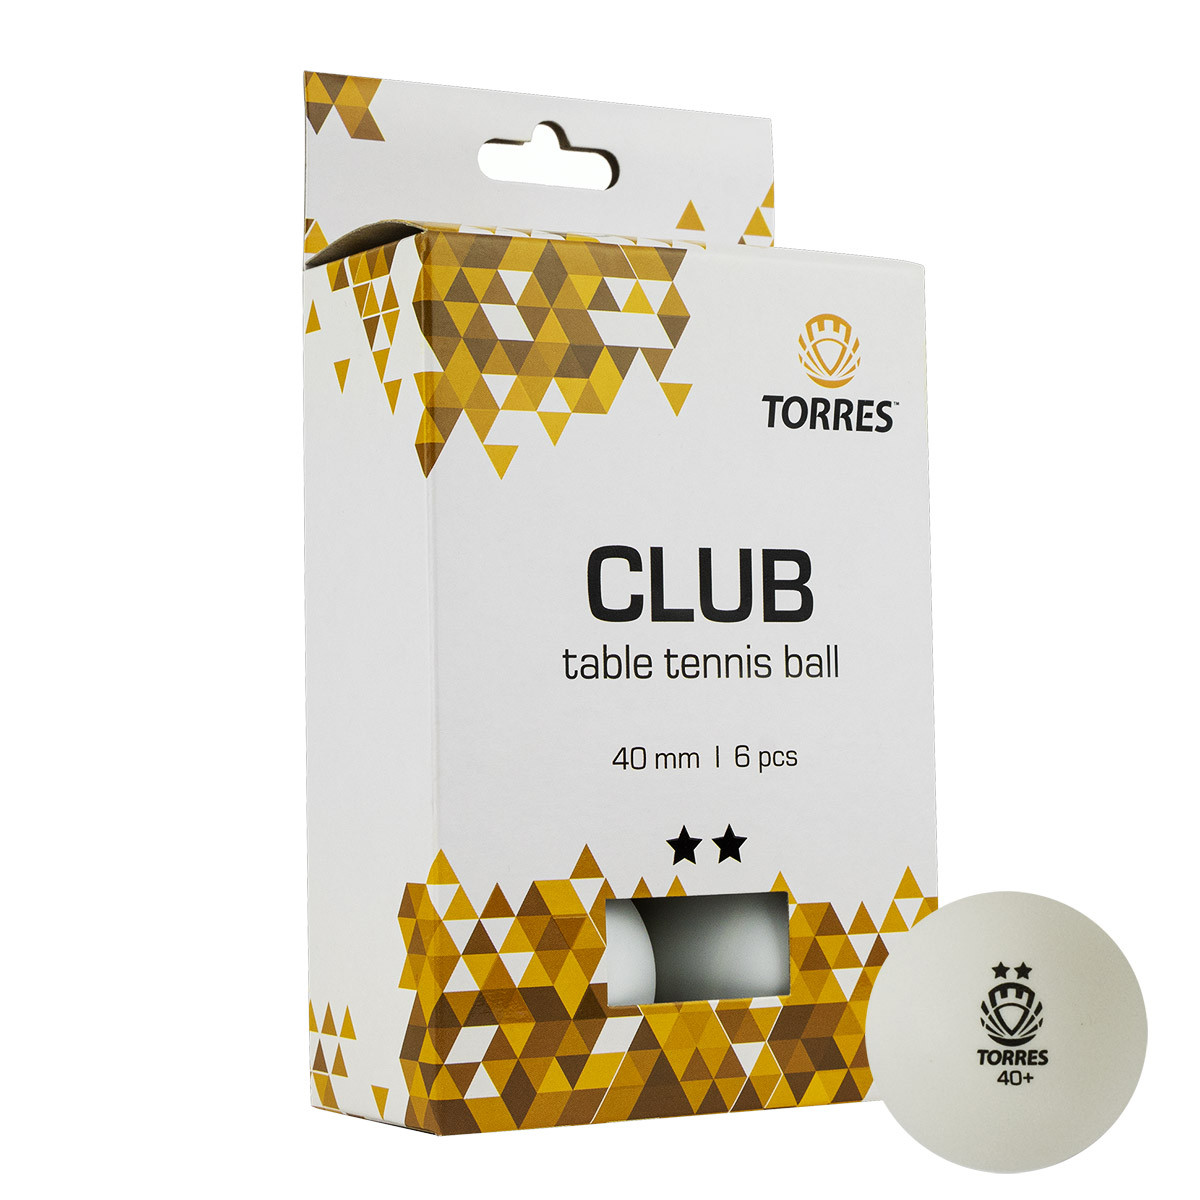   .  TORRES Club 2*, TT21014, . 40+, . 6 , 